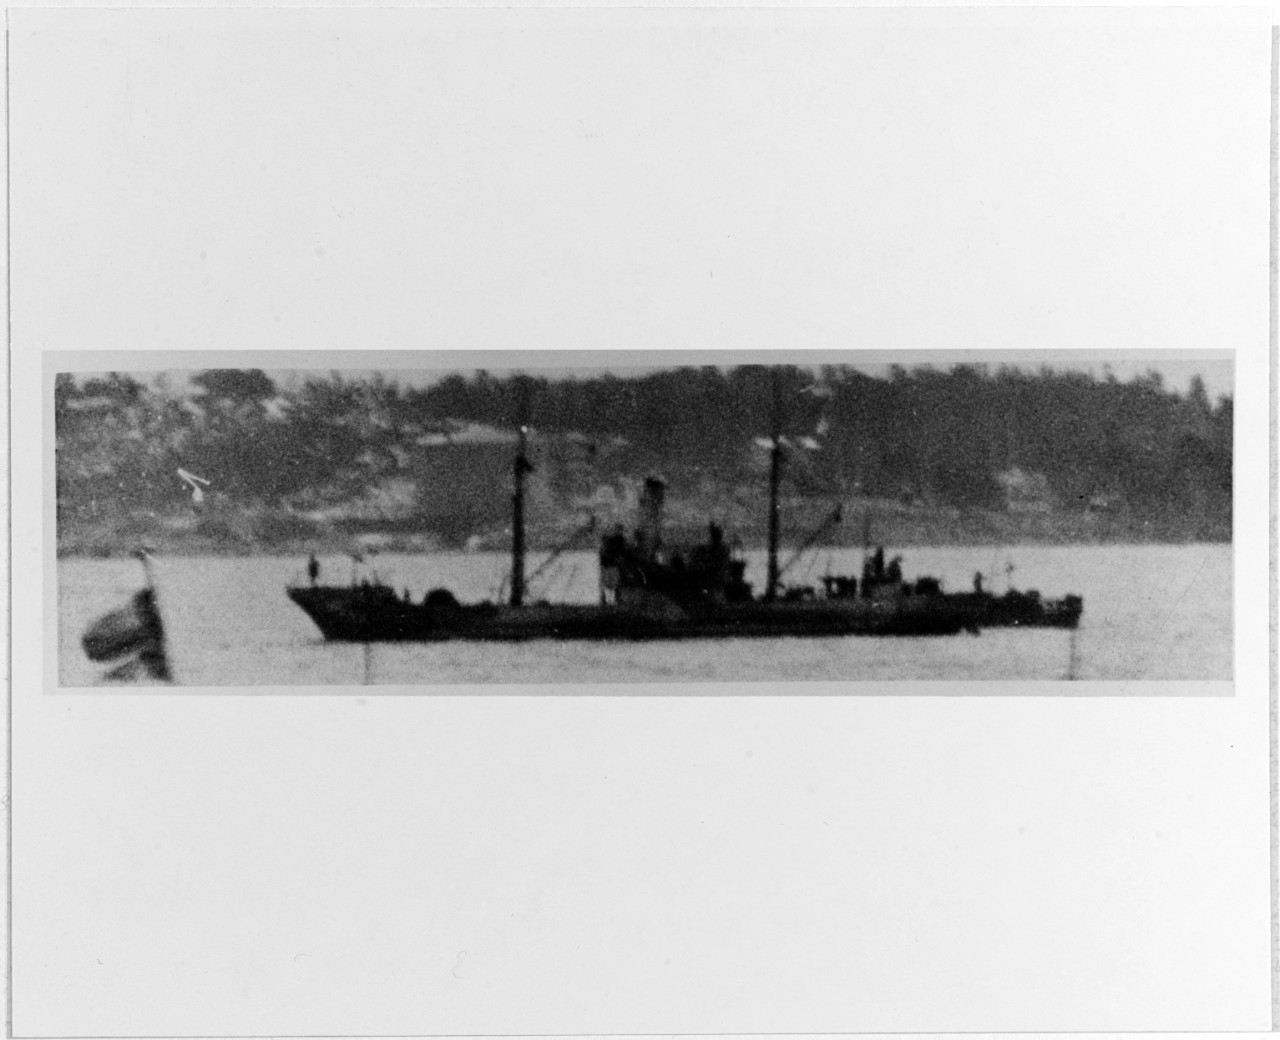 IZHORETS (Soviet Surveying Vessel, 1918-circa 1950)